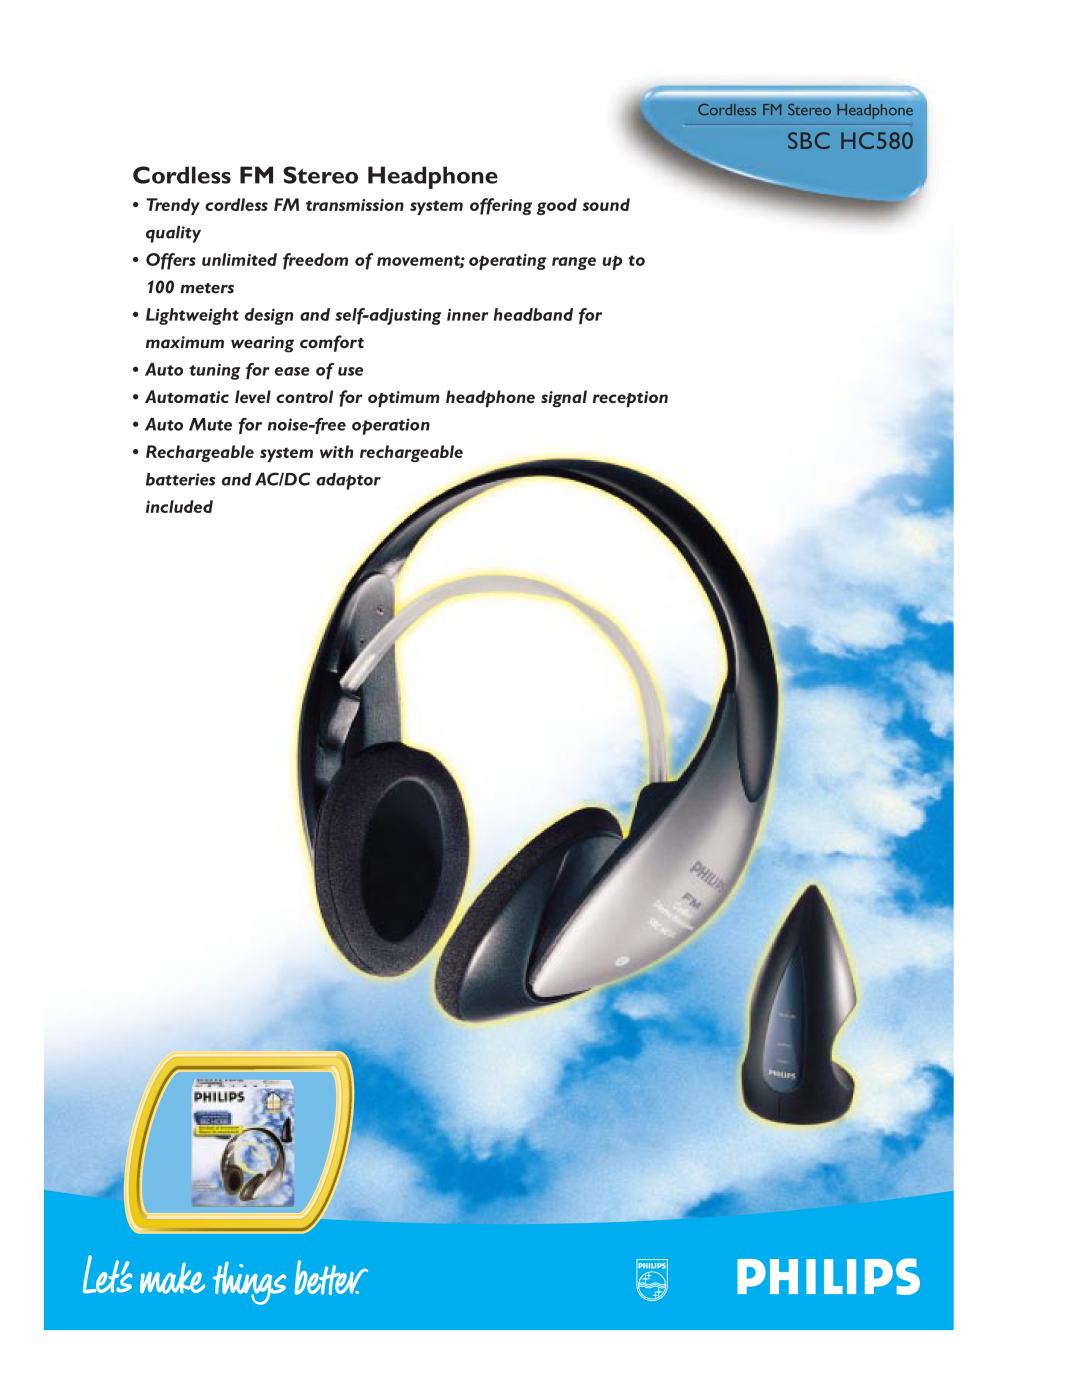 Philips SBC HC580 manual Cordless FM Stereo Headphone 